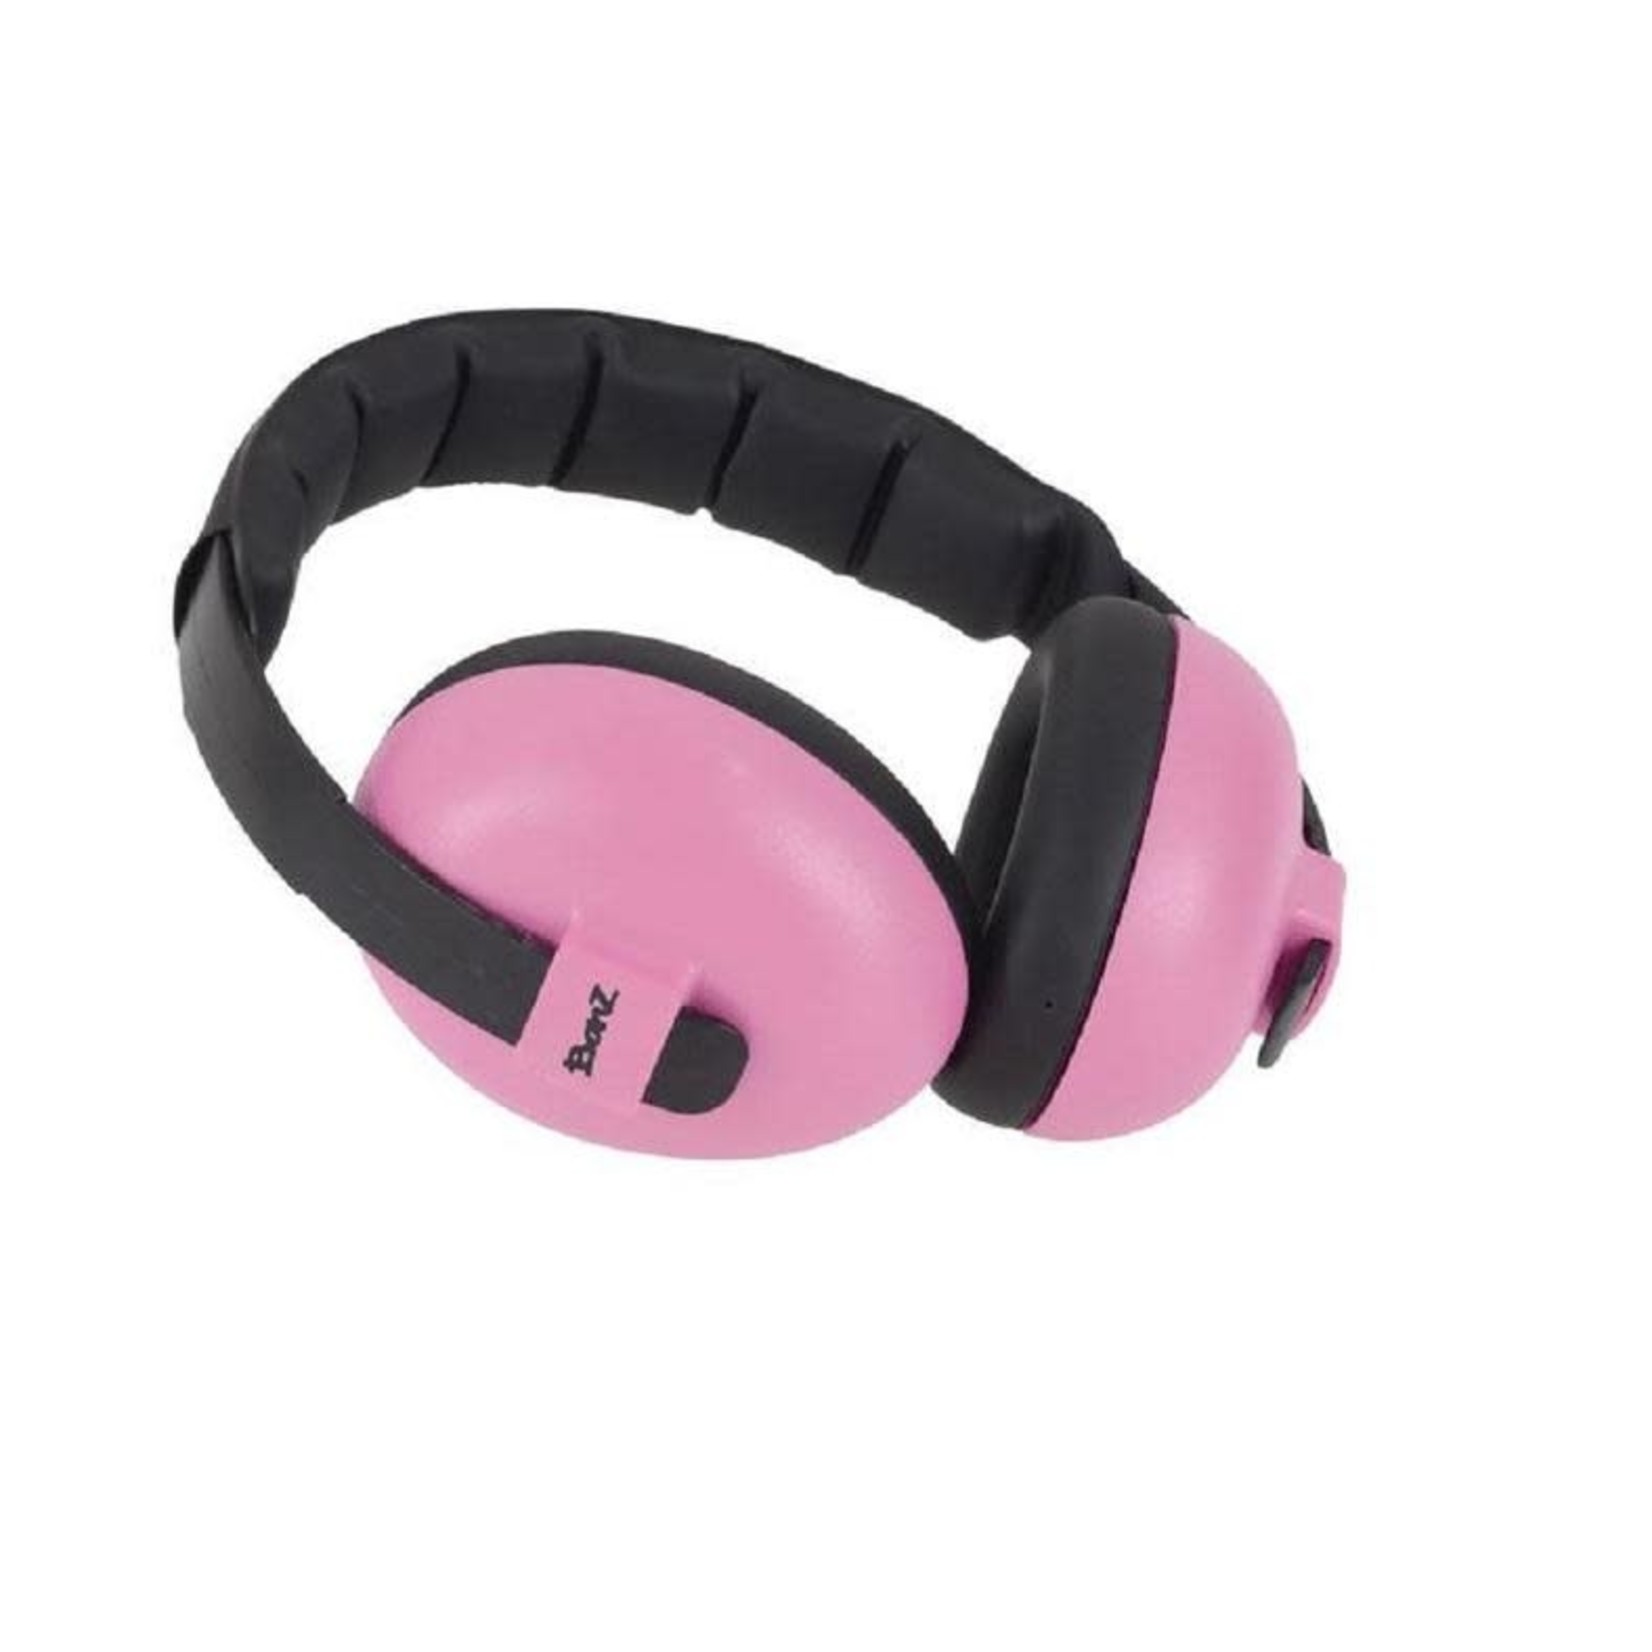 Banz Baby Banz-Hearing Protection Earmuffs